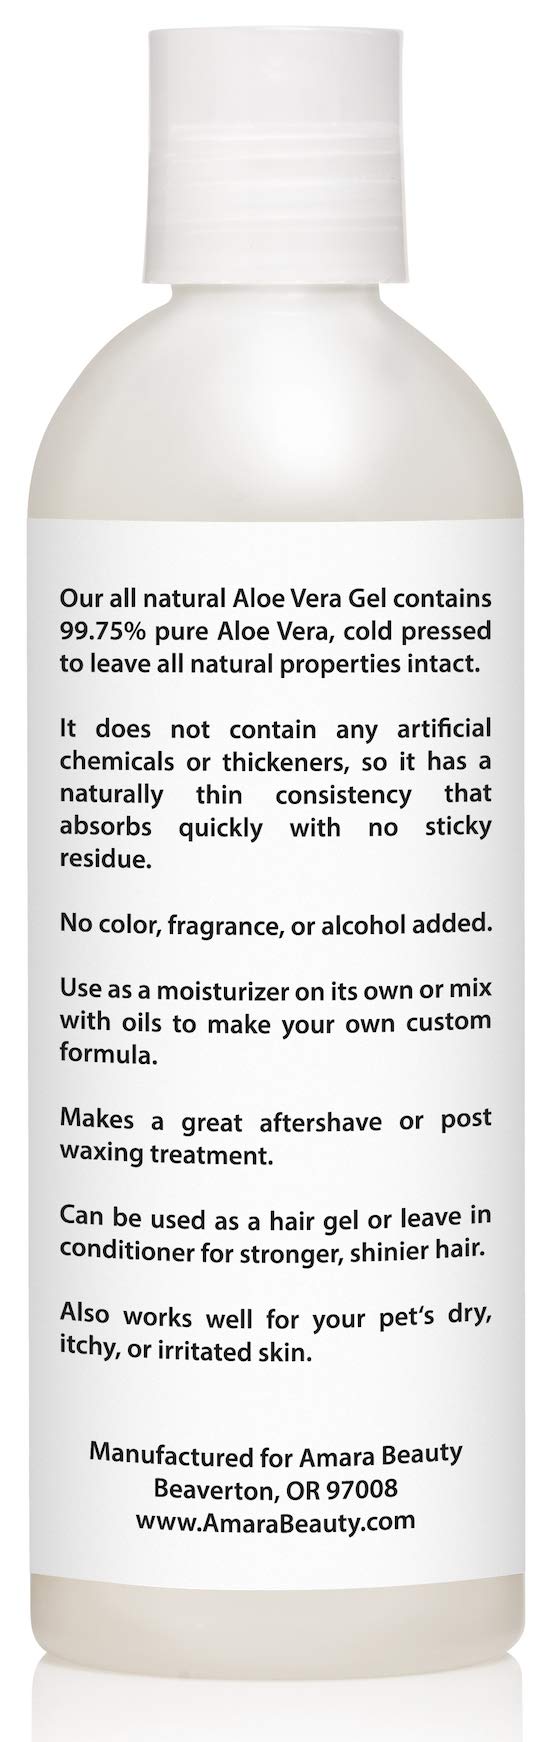 Aloe Vera Gel from Organic Cold Pressed Aloe, 8 fl. oz. - $21.95